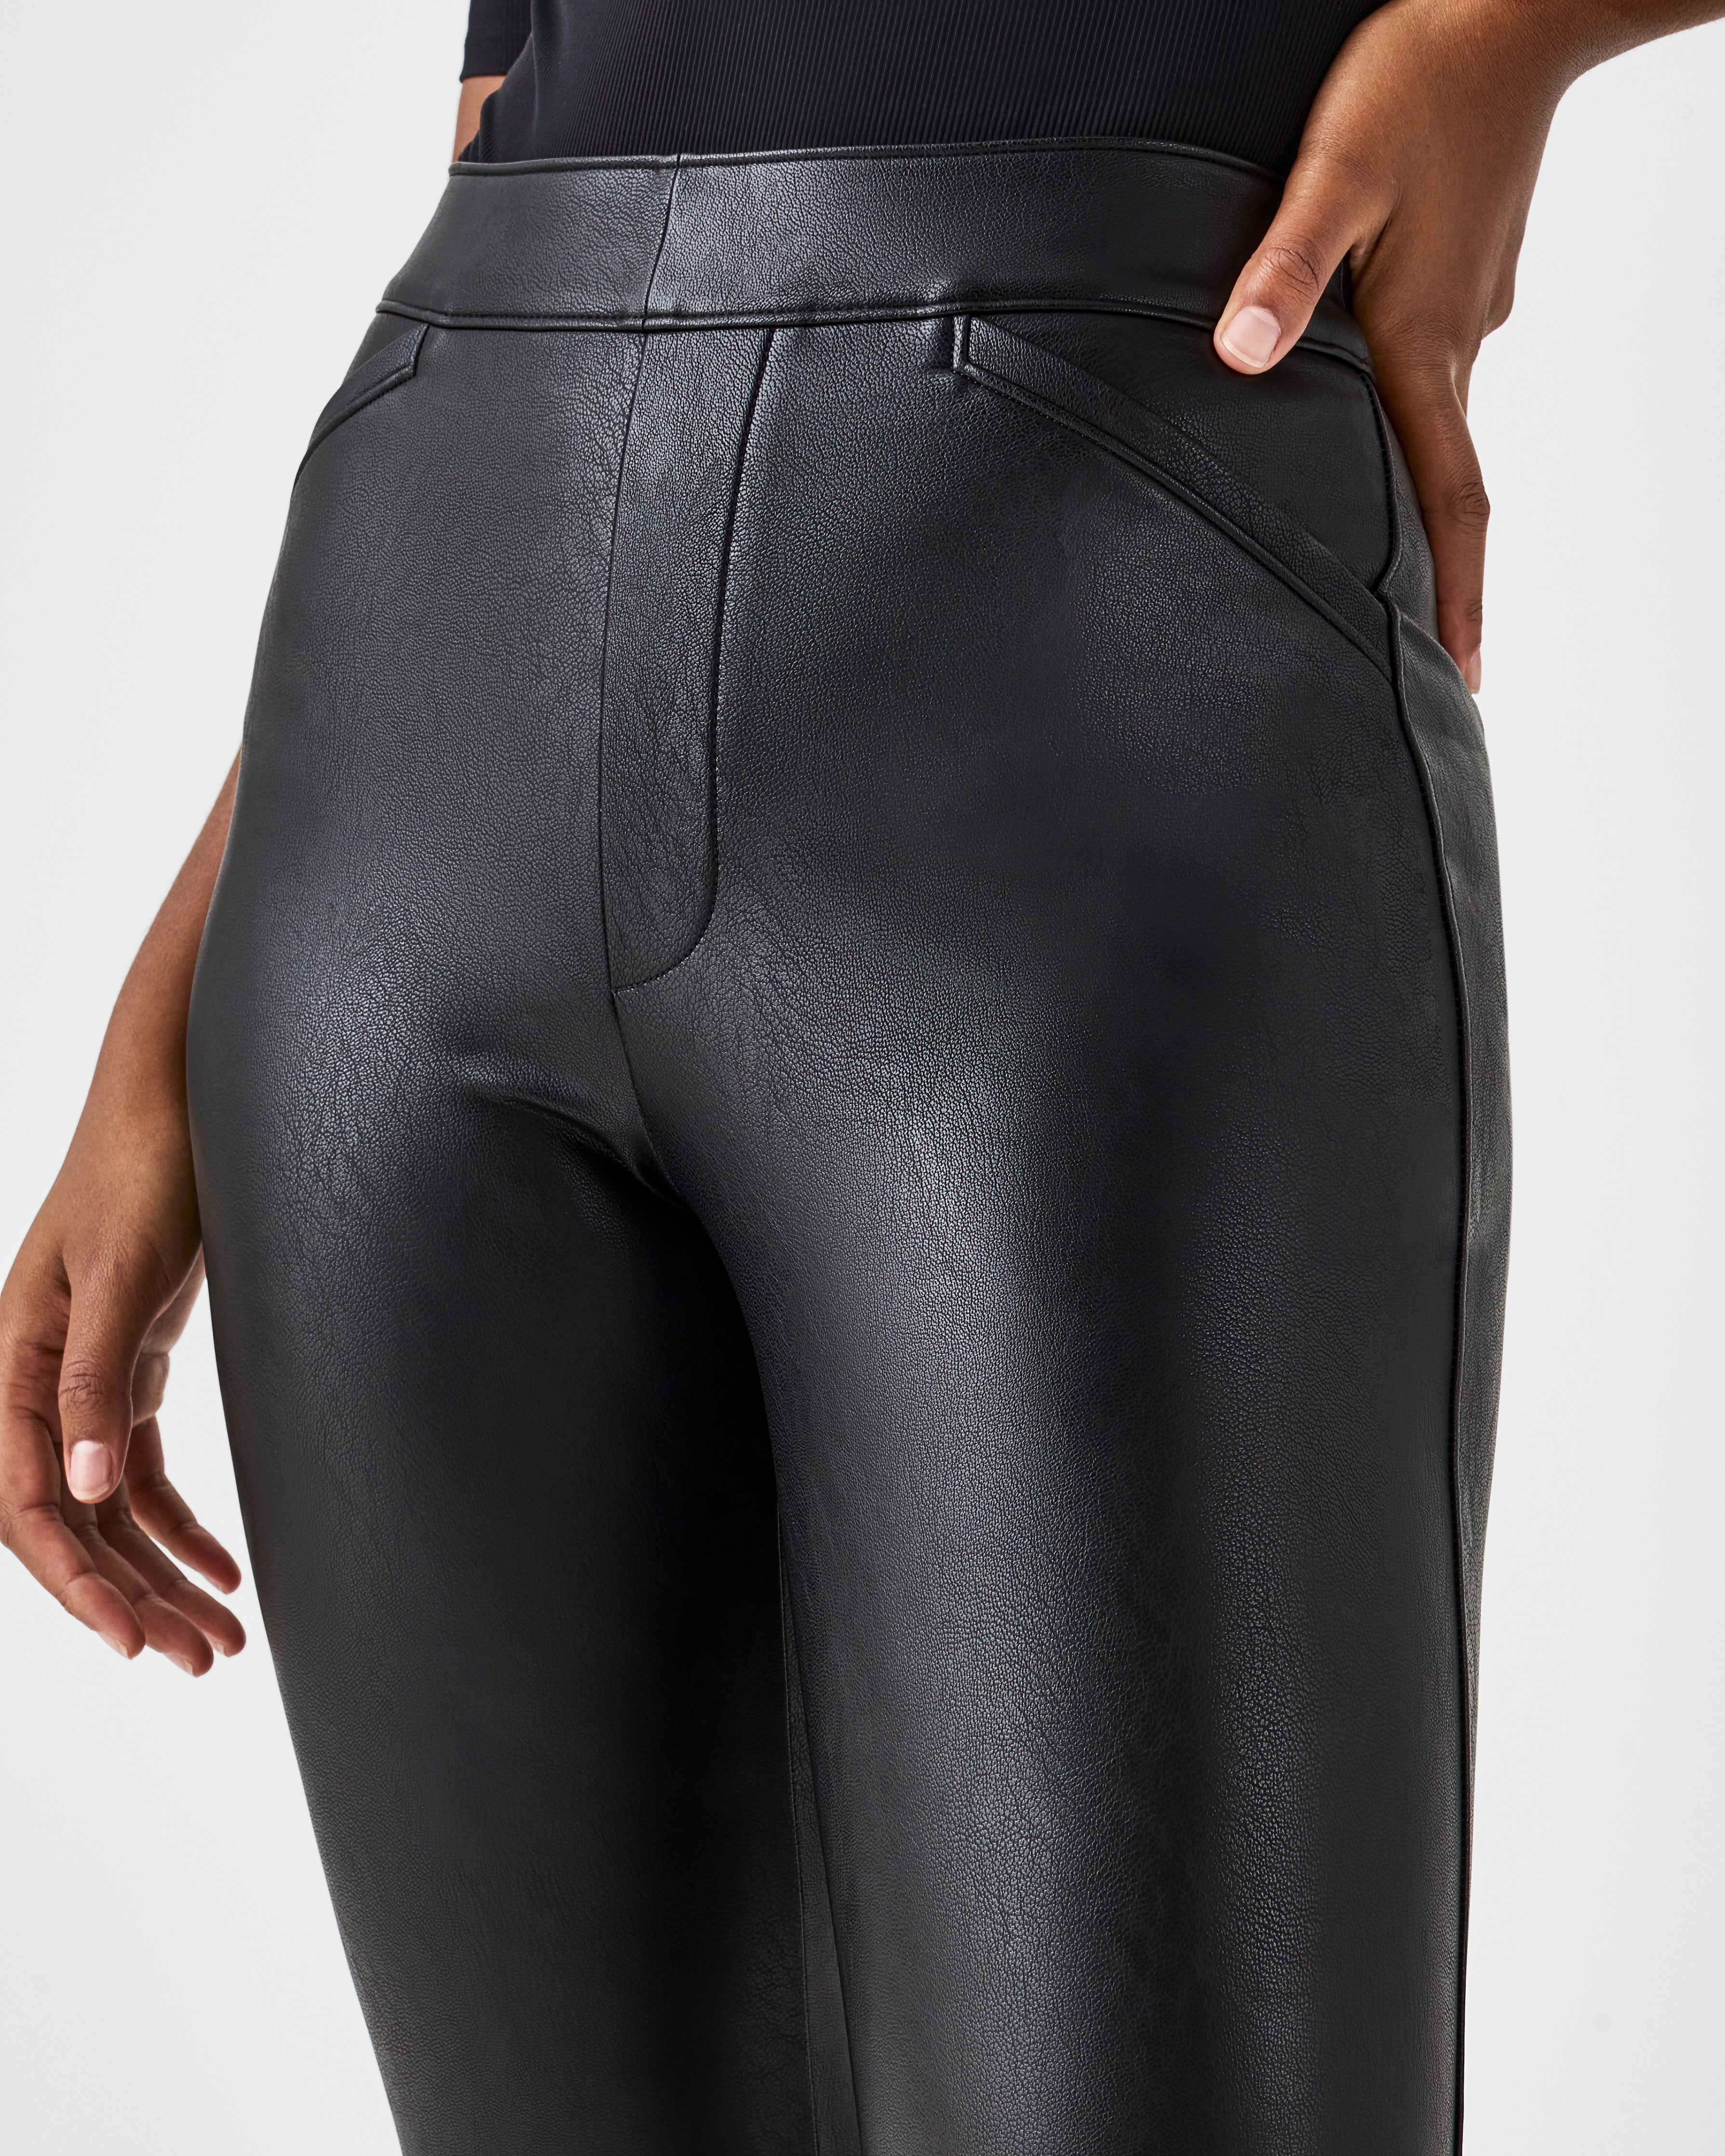 Black Faux Leather Flare Pant, Pants